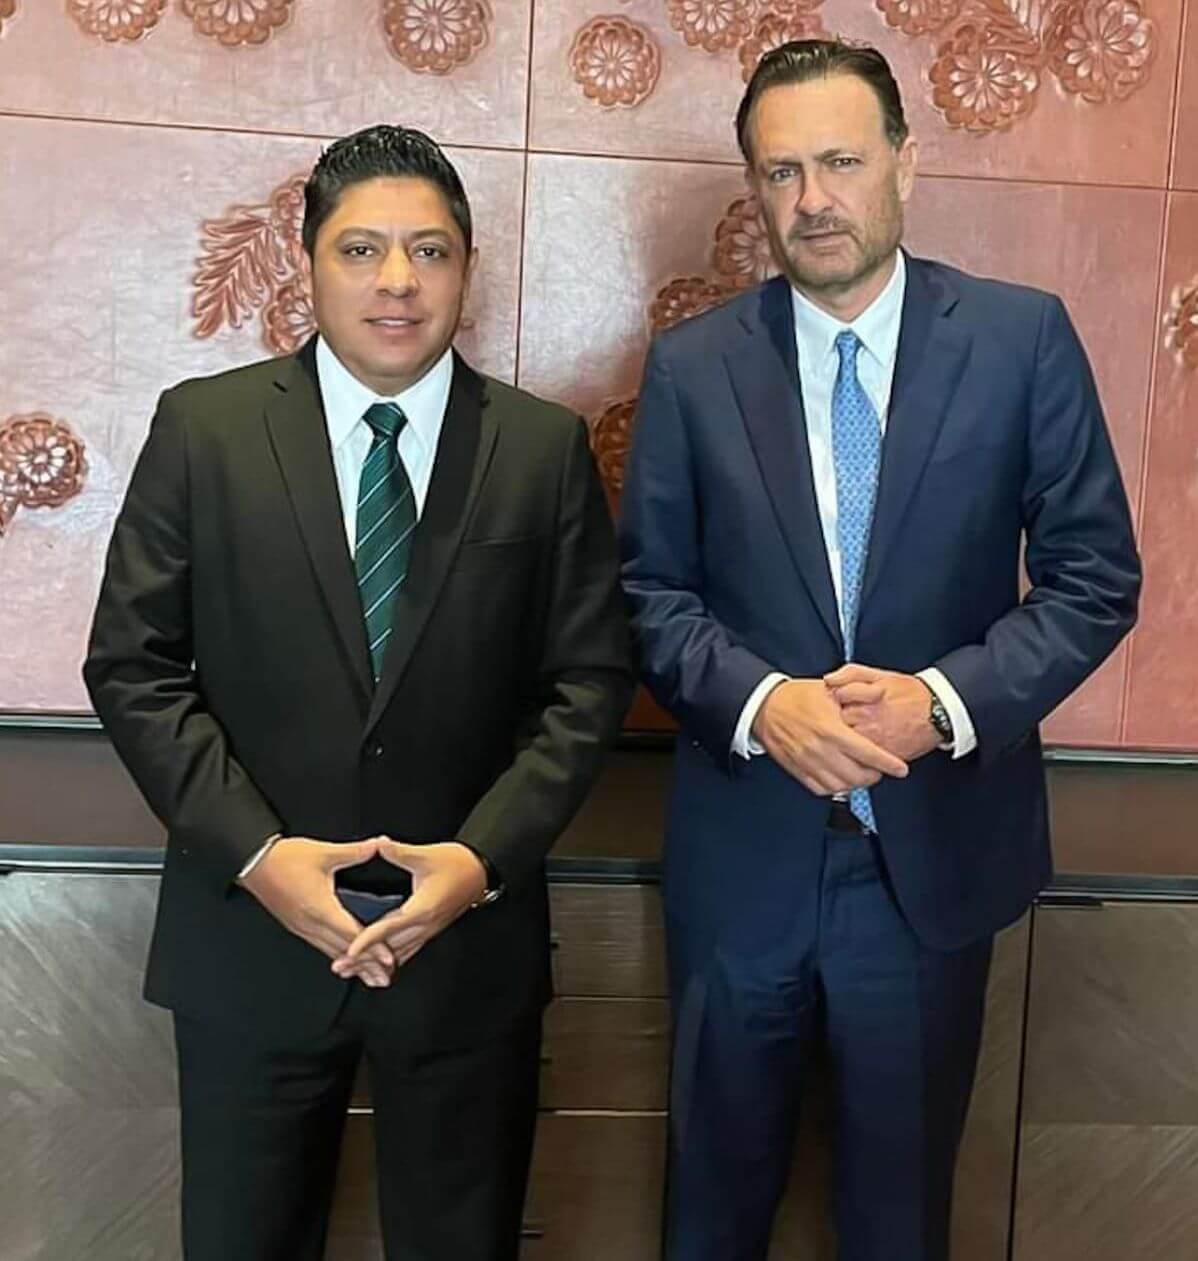 Gobernador de San Luis Potosí acordó fortalecer lazos de cooperación económica con su homólogo del Estado de Querétaro Mauricio Kuri González